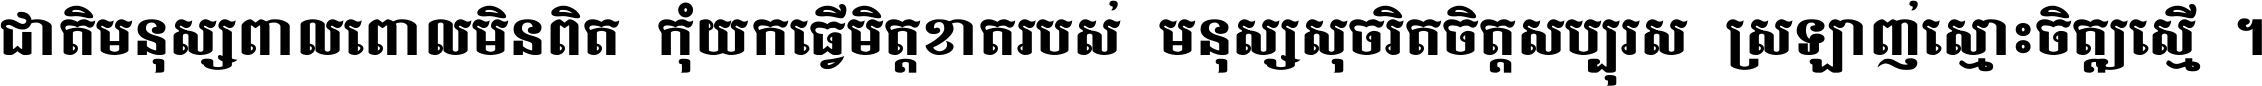 Khmer Mondulkiri A medium Bold